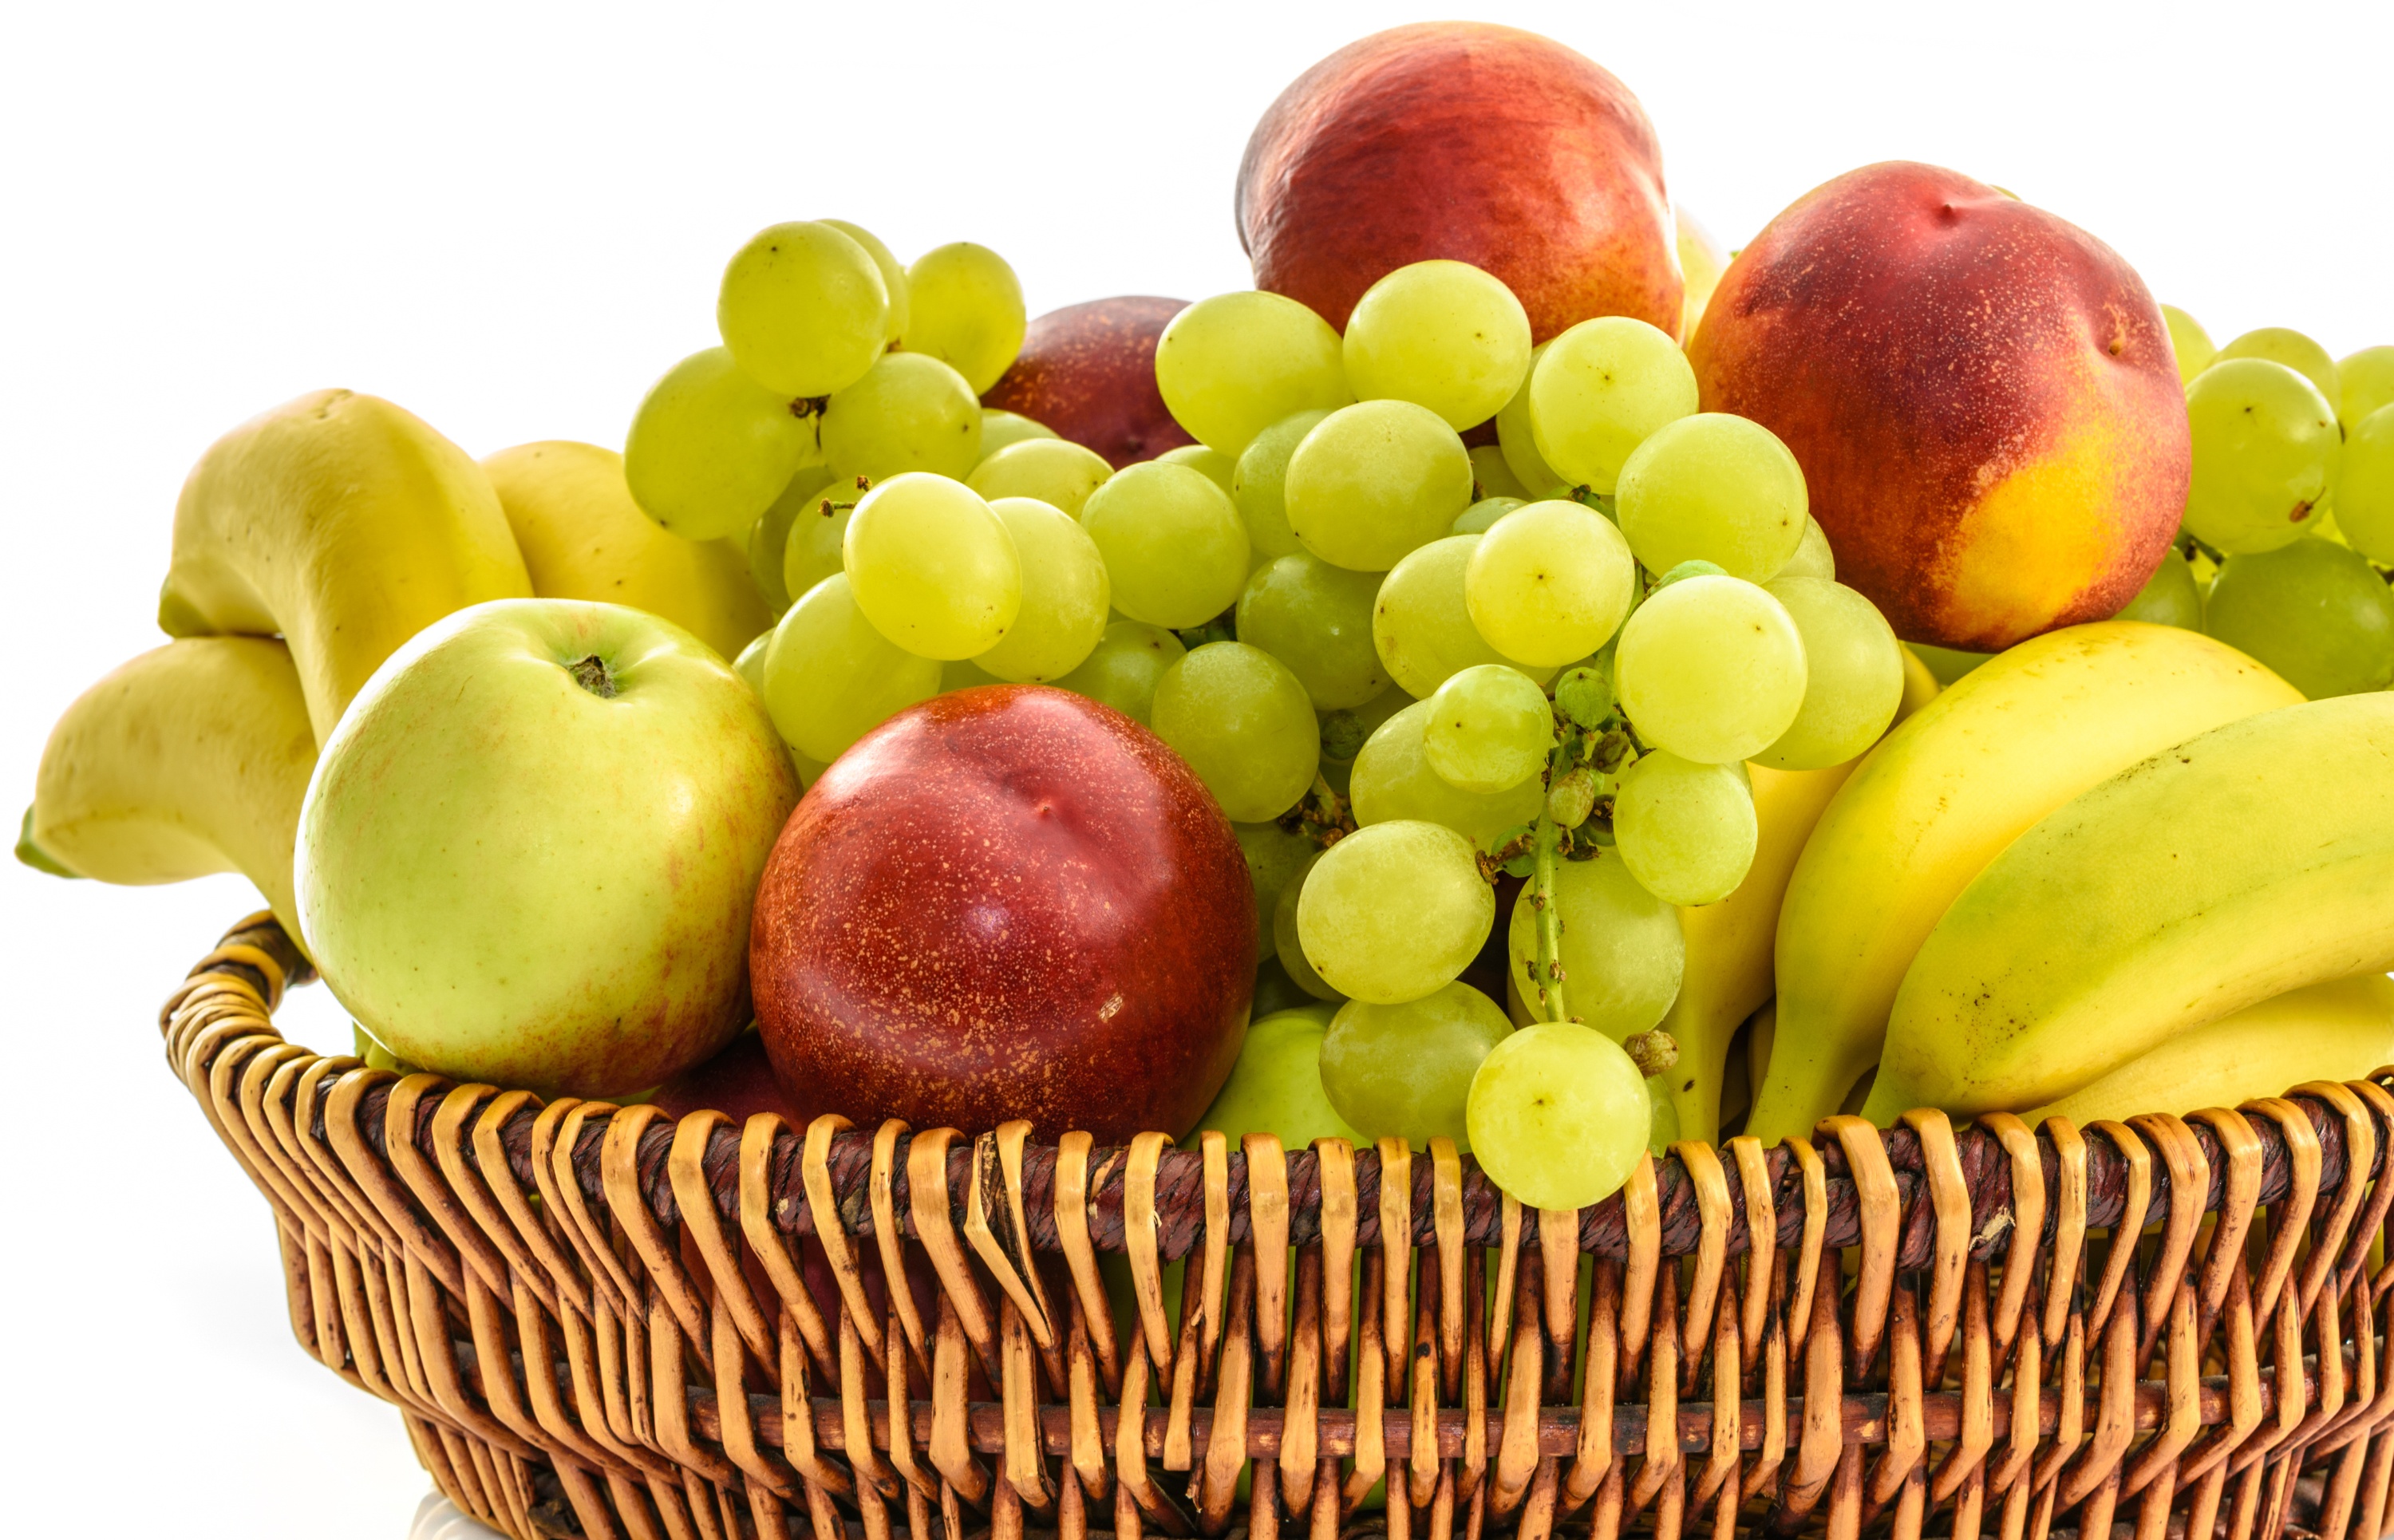 Grape pear. Корзина с фруктами. Виноград и яблоки. Яблоки груши виноград. Корзина с овощами и фруктами.